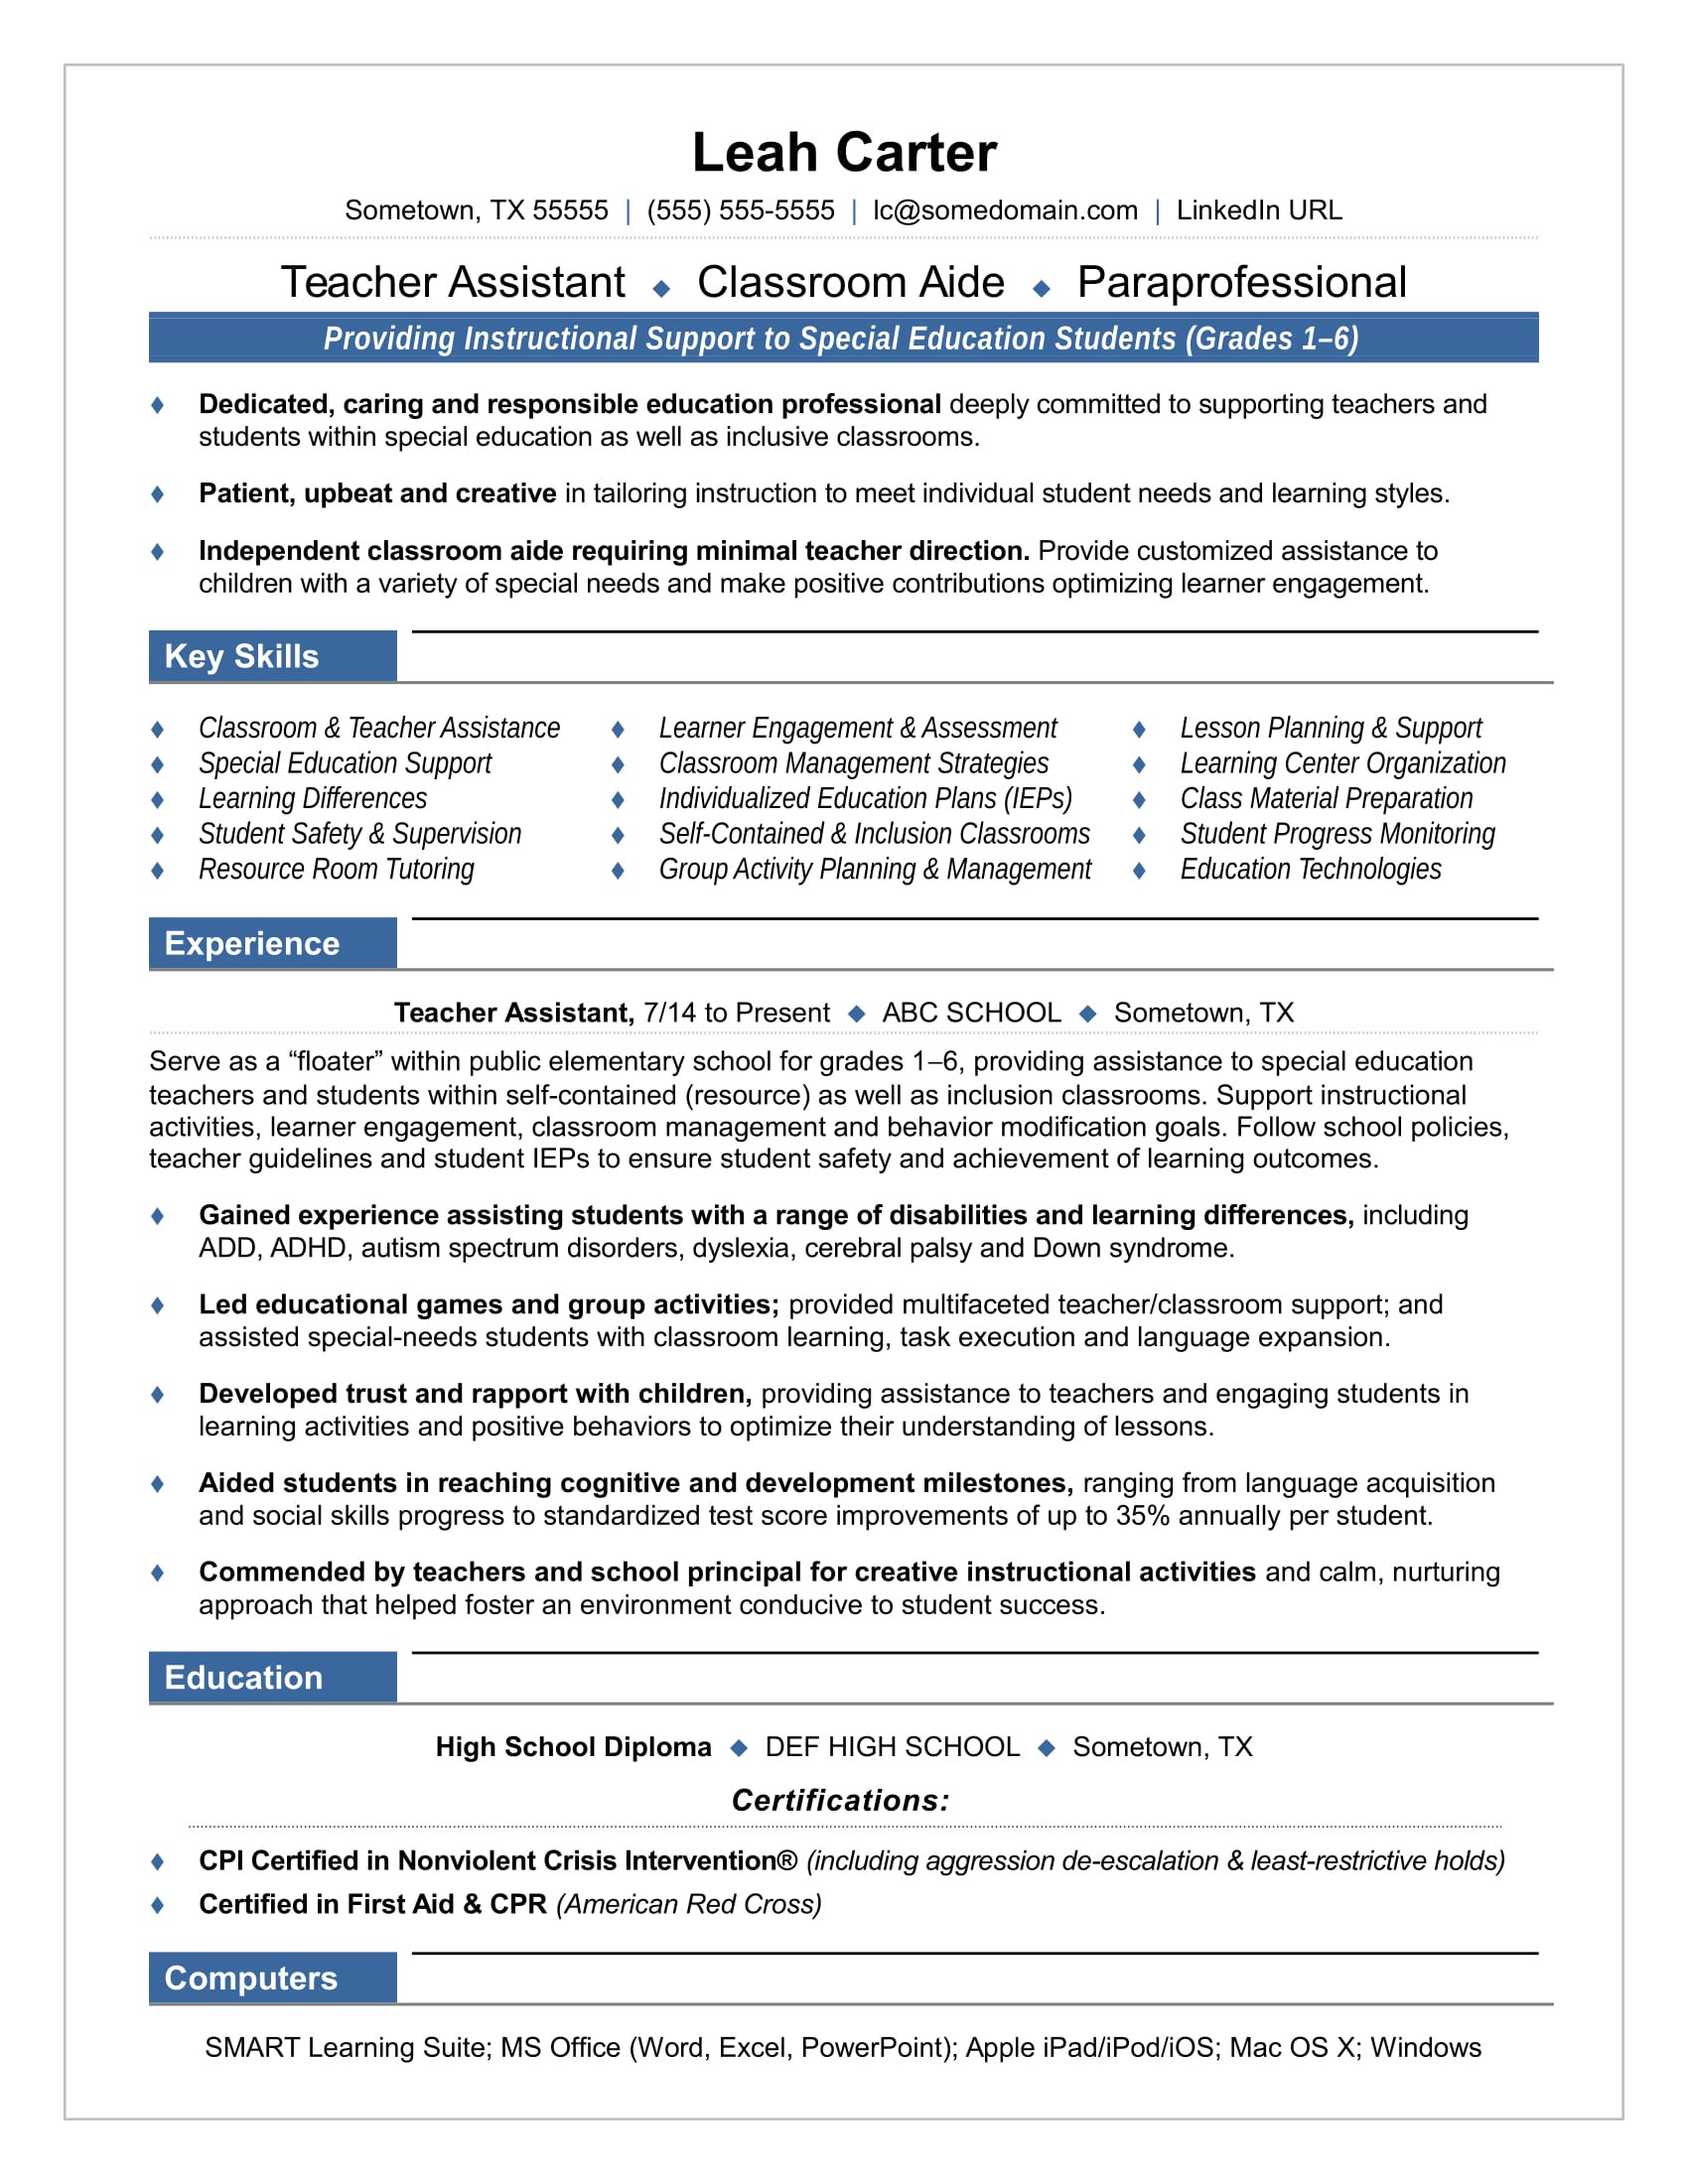 2023 Resume Summary Of Qualifications Samples Teacher assistant Resume Sample Monster.com